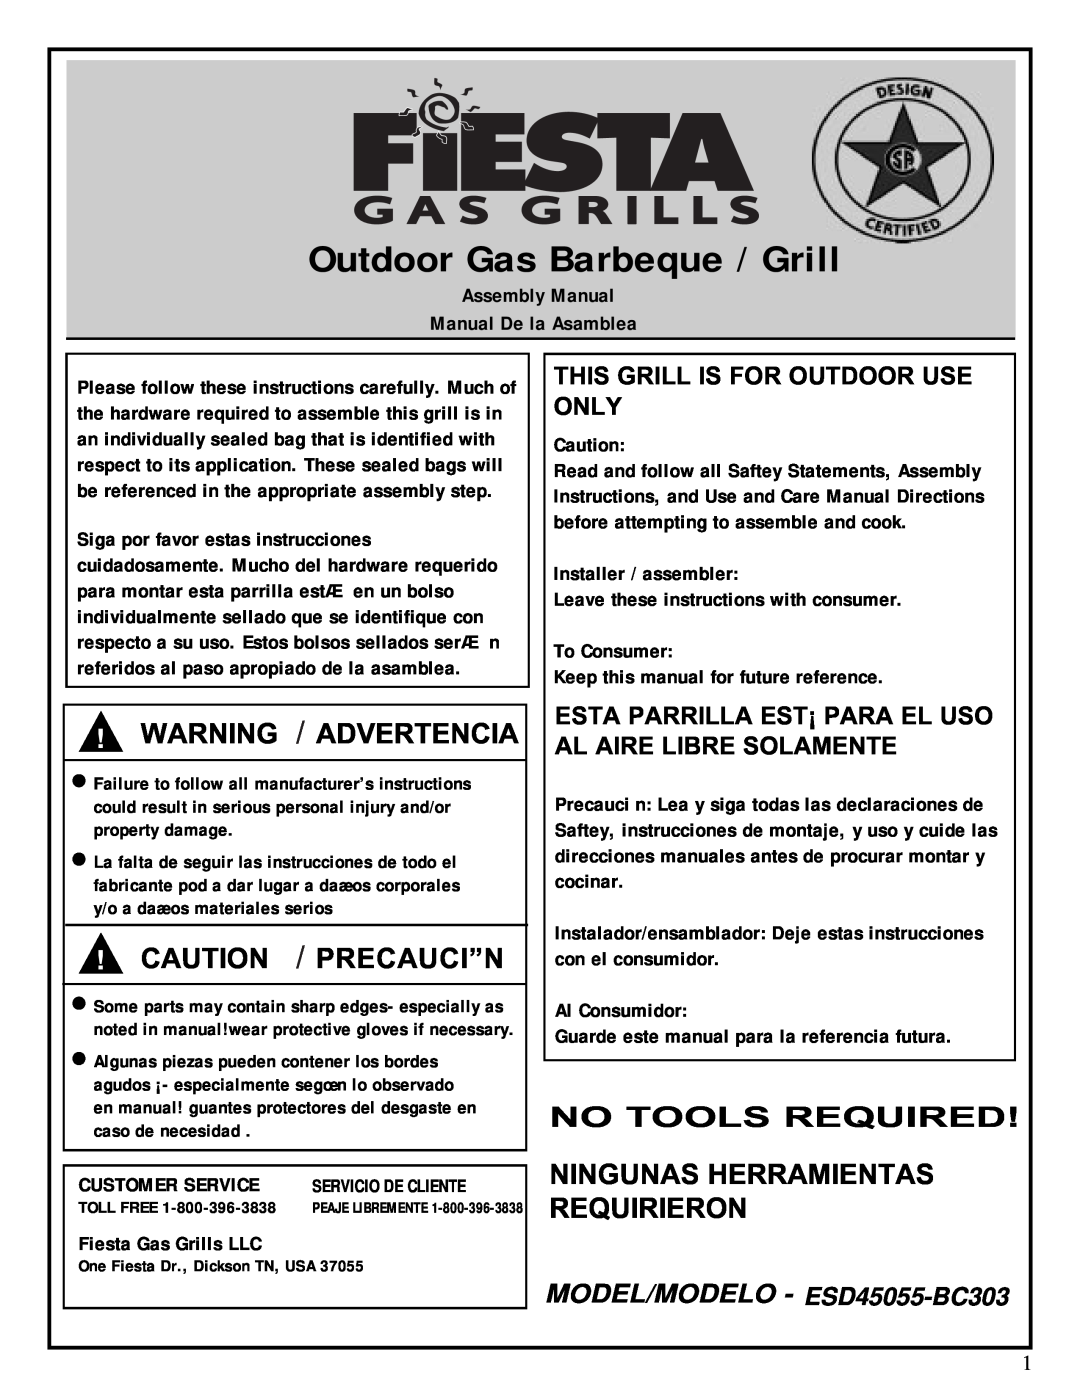 Fiesta ESD45055-BC303 manual Outdoor Gas Barbeque / Grill, Warning / Advertencia, Caution / Precauci”N, No Tools Required 